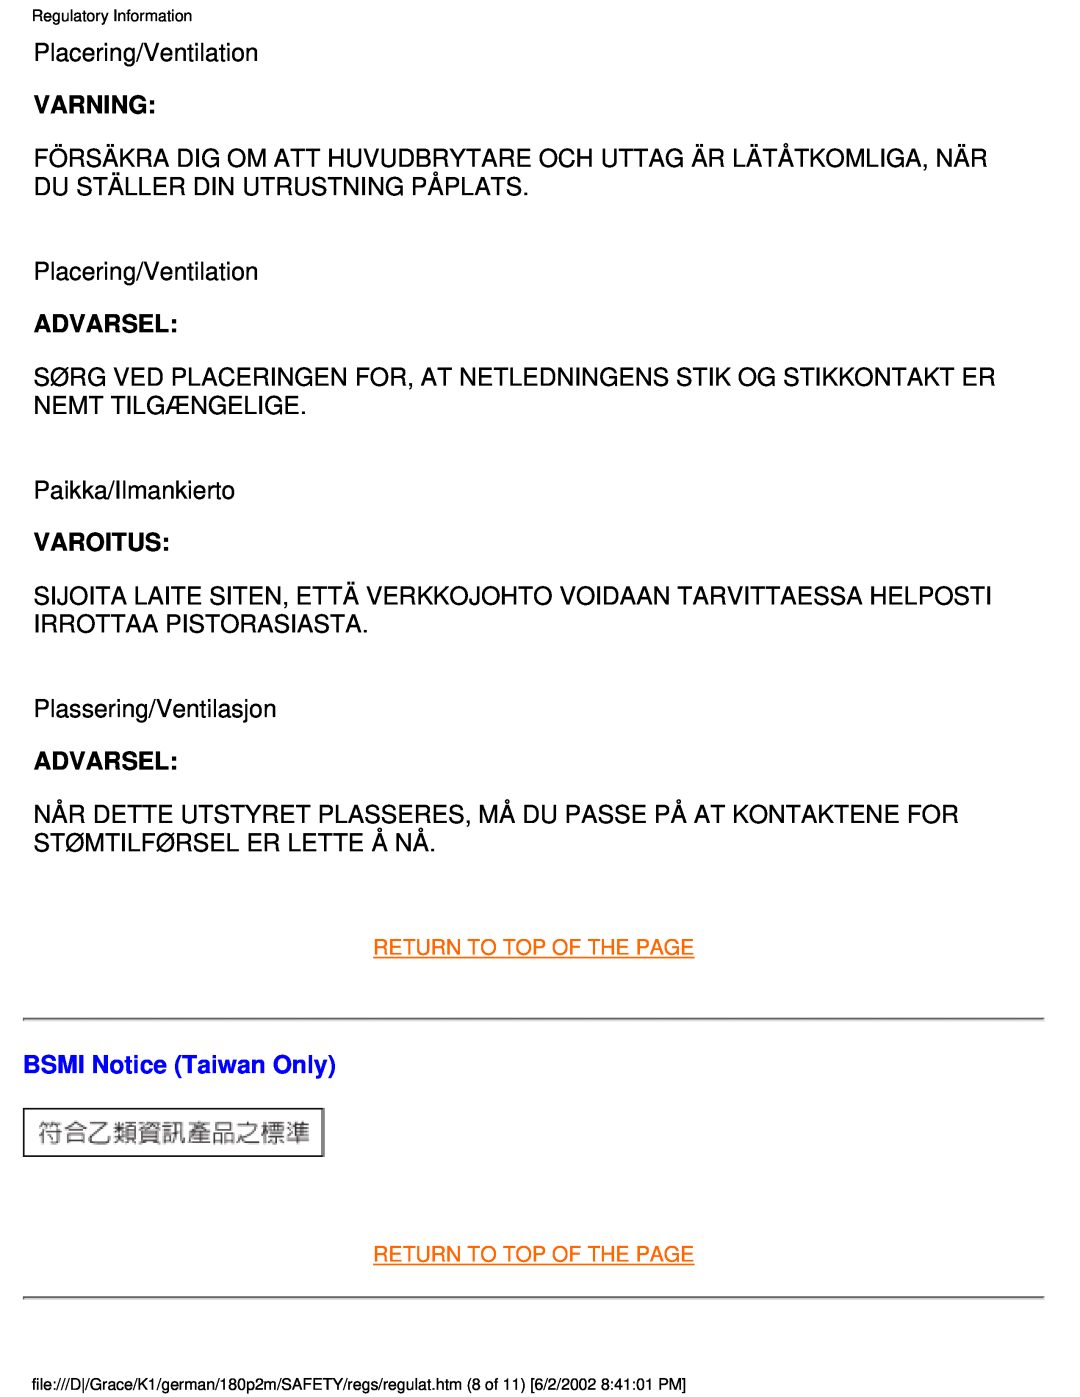 Philips 180P2G user manual Varning, Advarsel, Varoitus, BSMI Notice Taiwan Only 